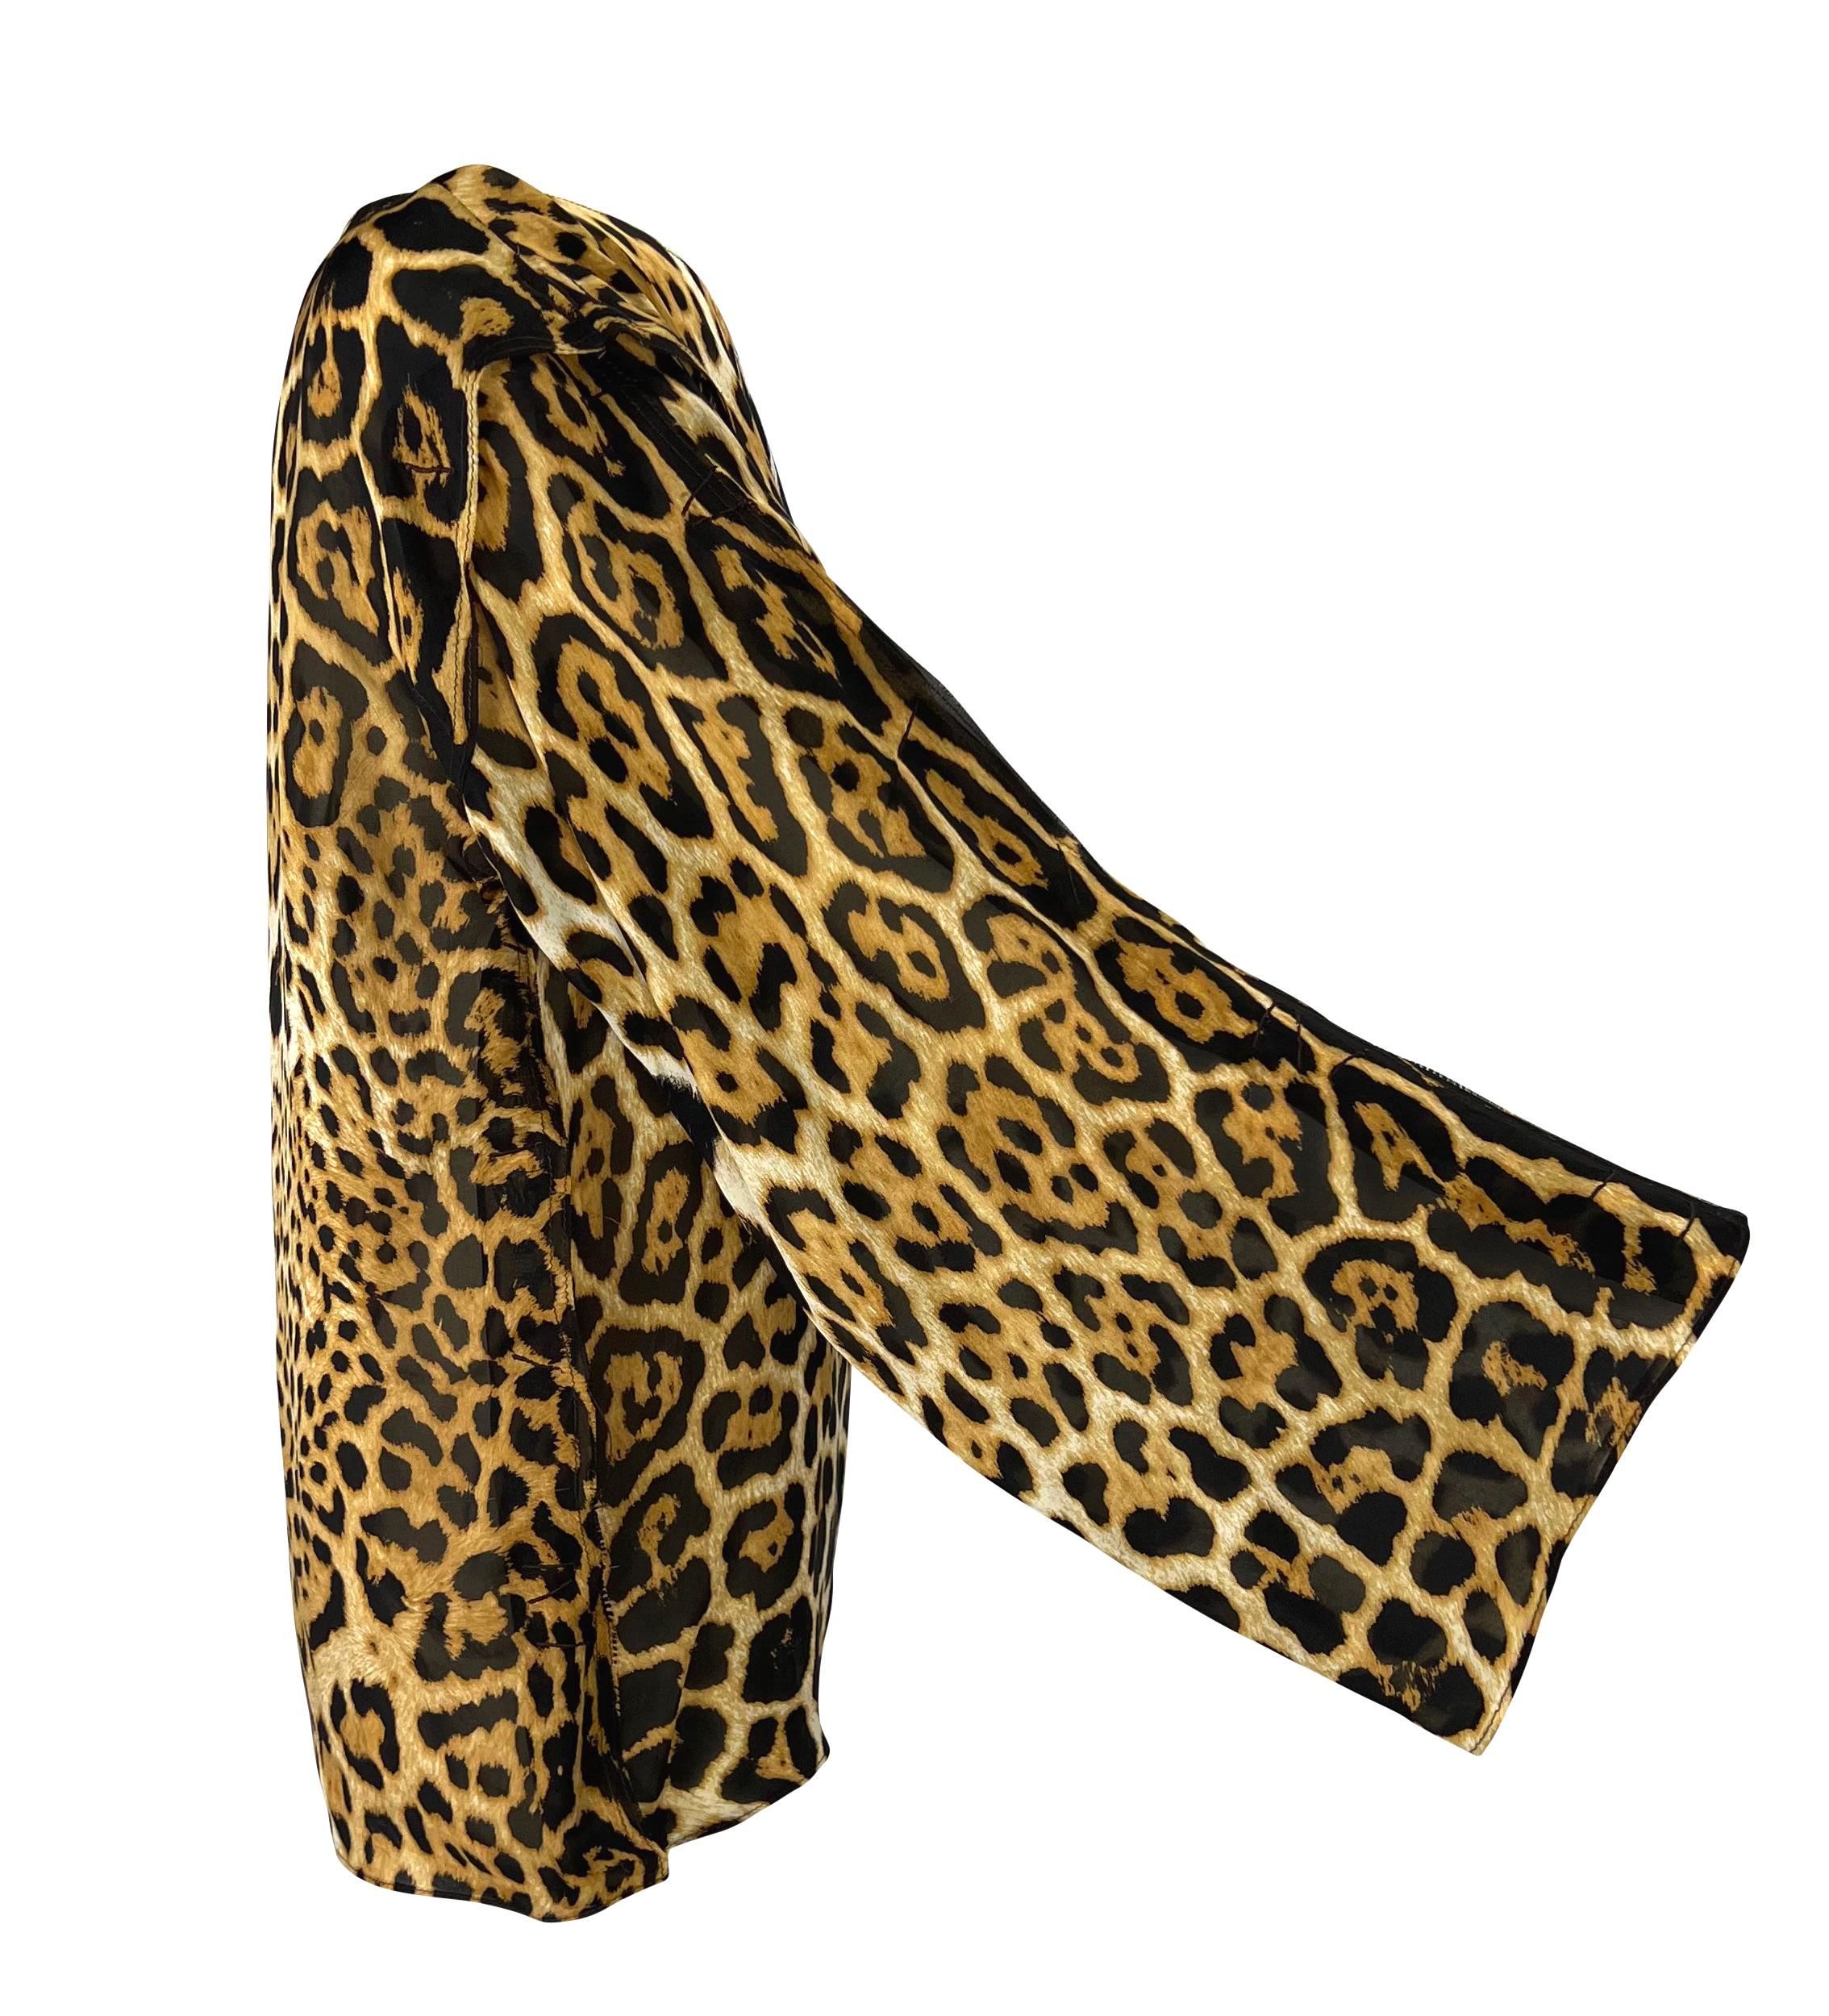 S/S 2002 Yves Saint Laurent by Tom Ford Safari Cheetah Print Sheer Silk Top For Sale 2